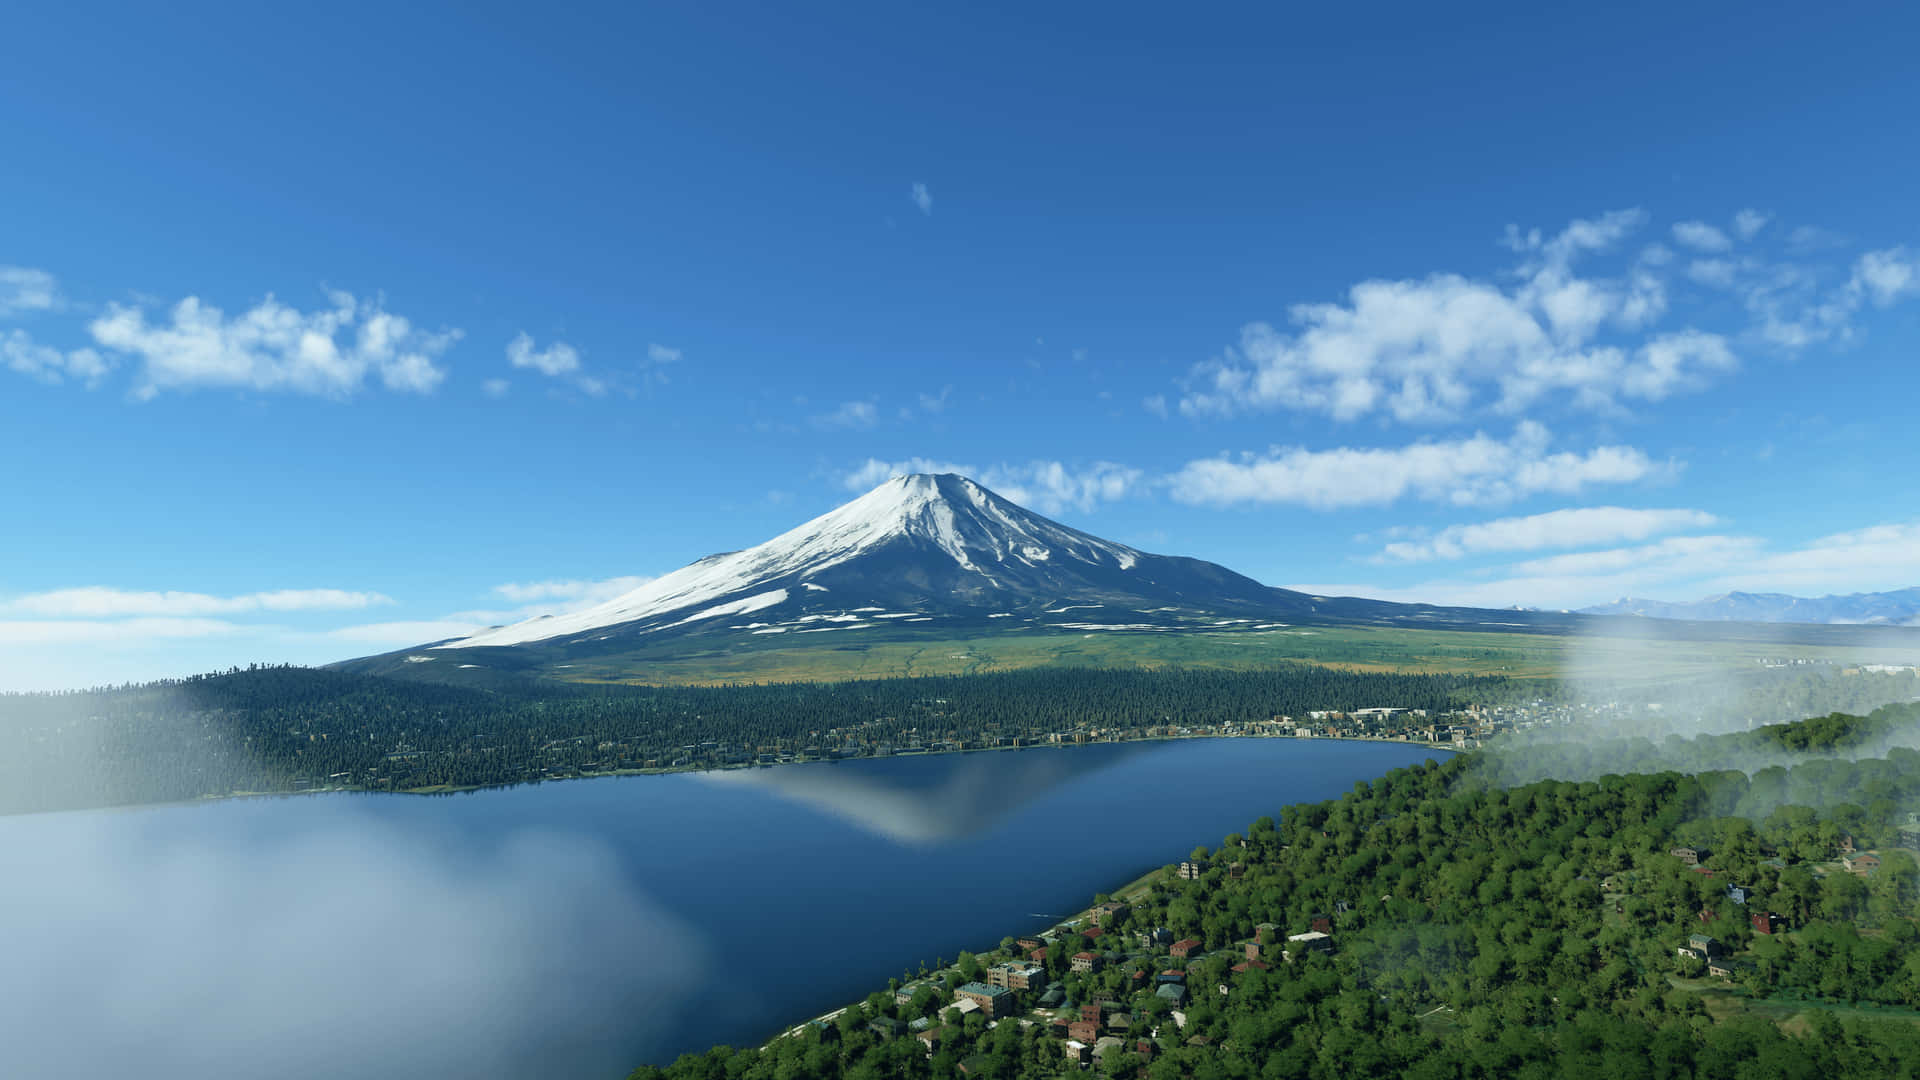 4kmicrosoft Flight Simulator Bakgrund Mount Fuji